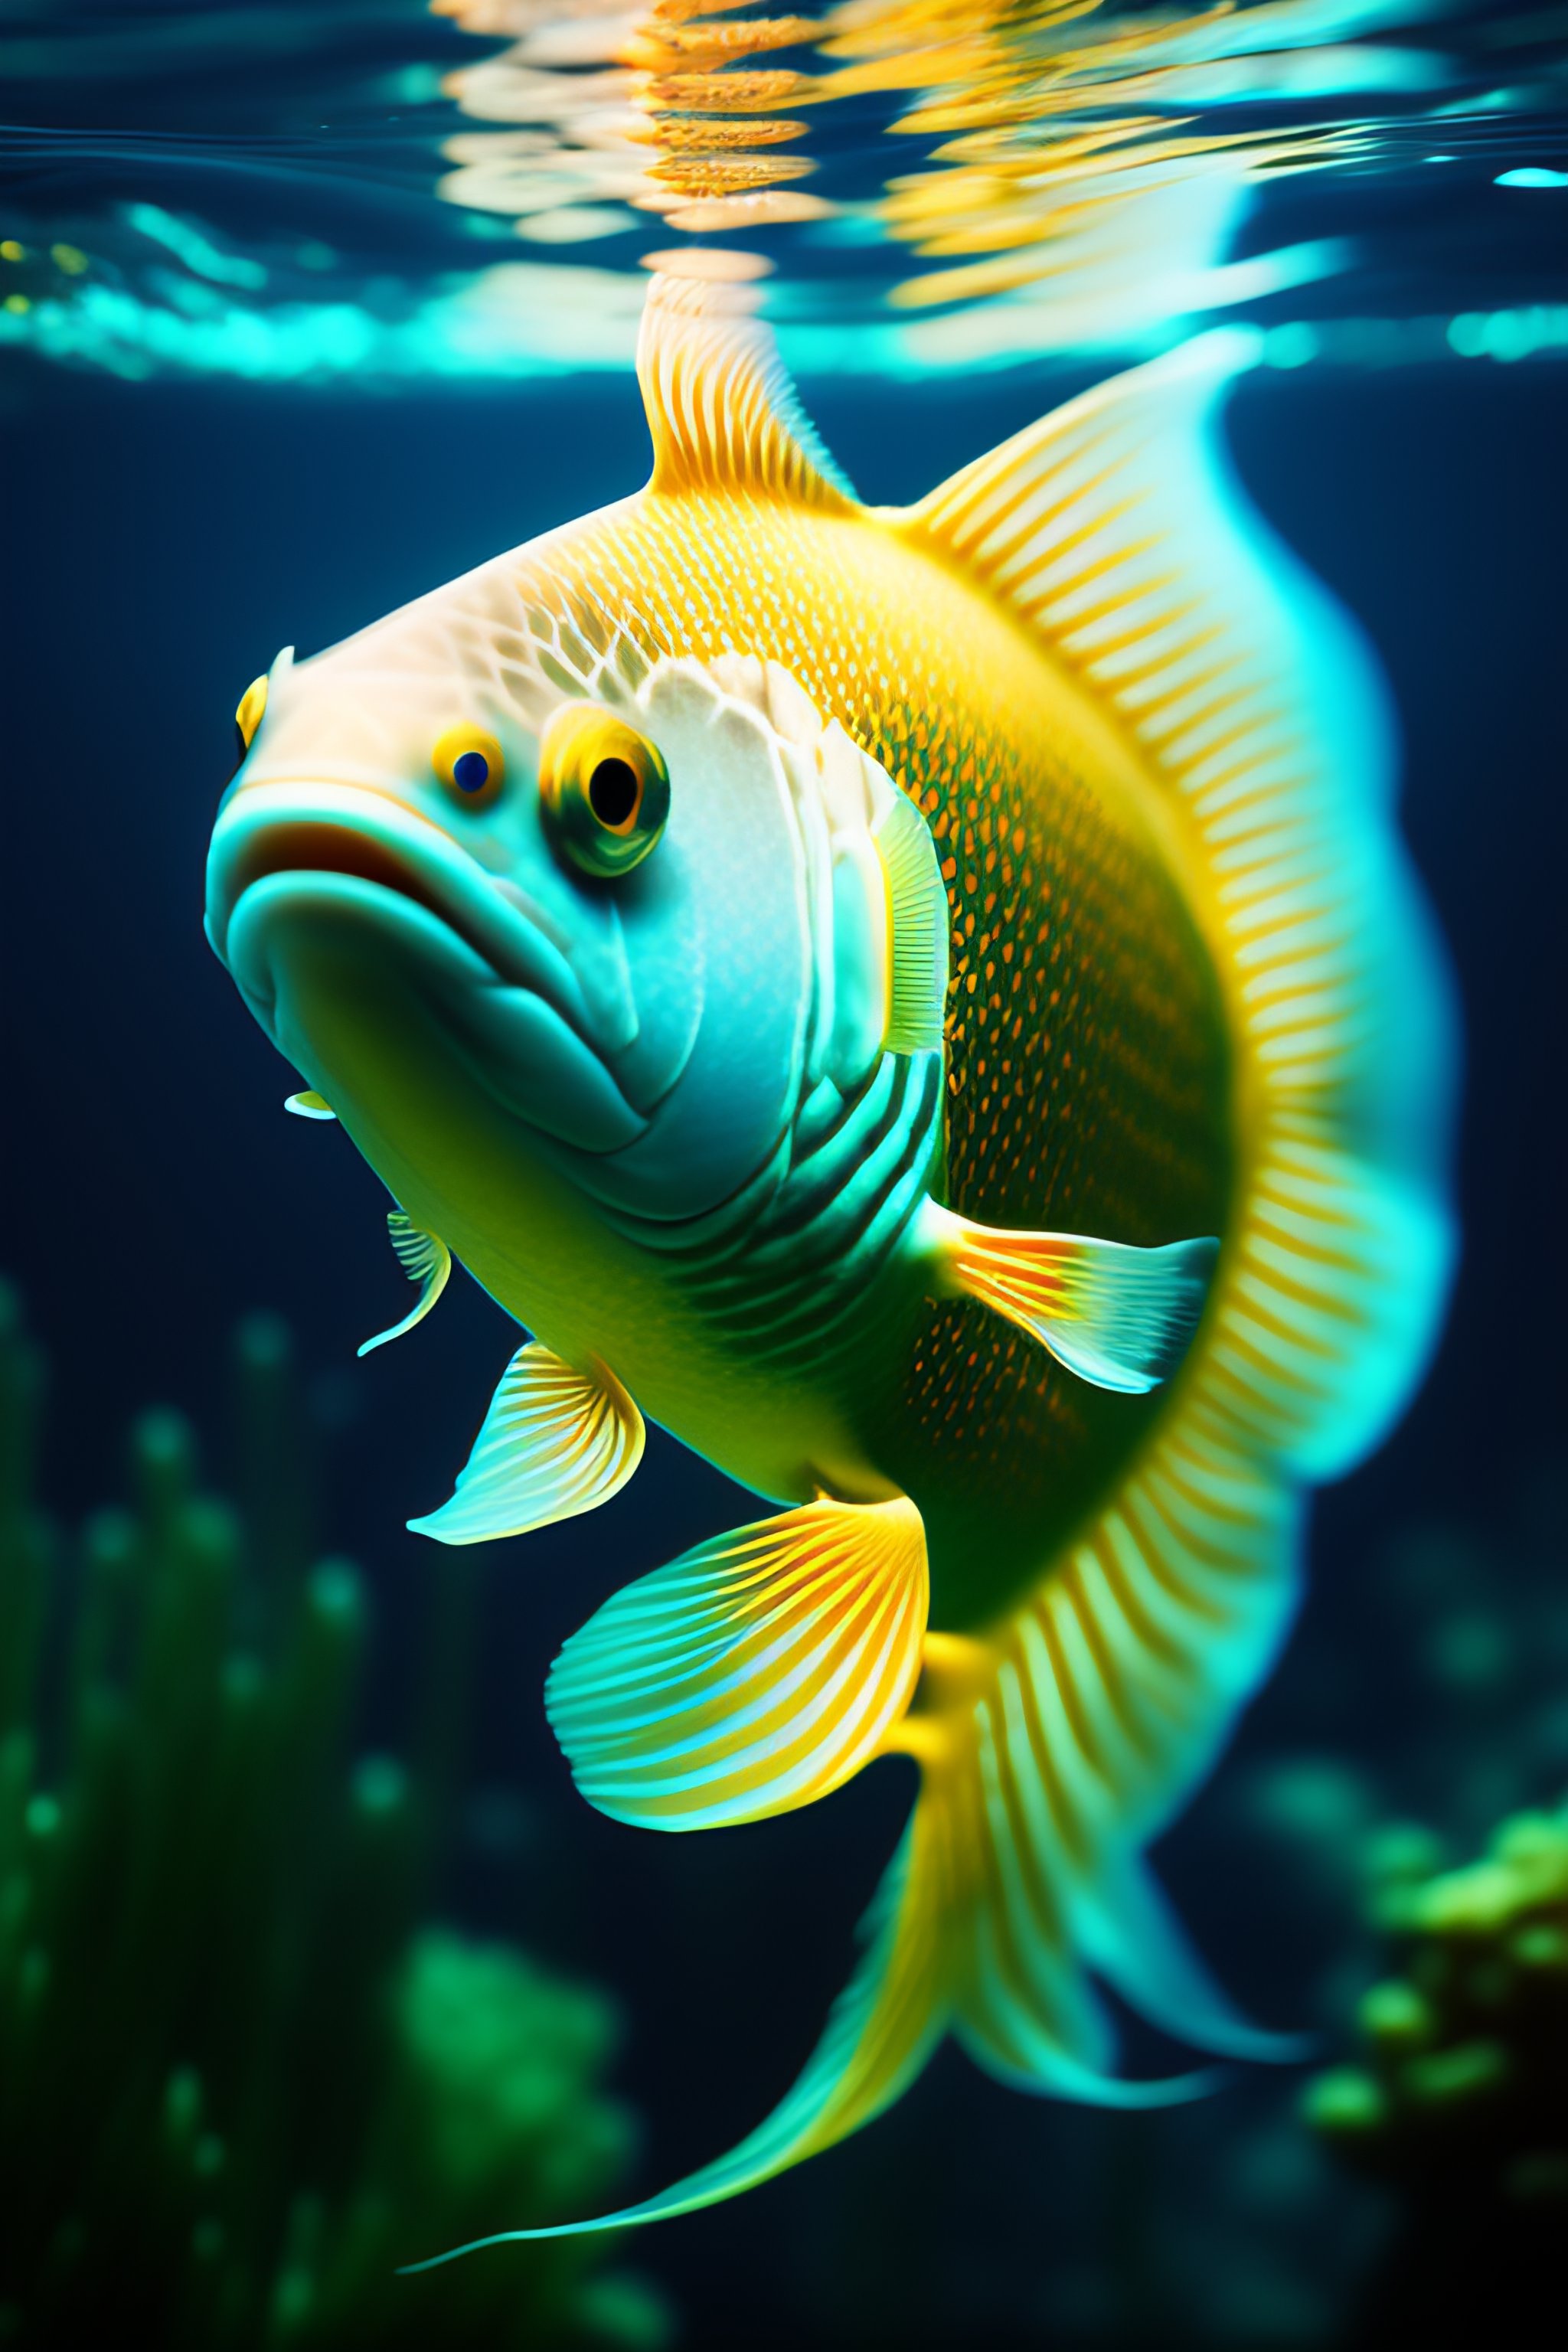 Lexica - A pretty underwater fantasy monster fish, elegant